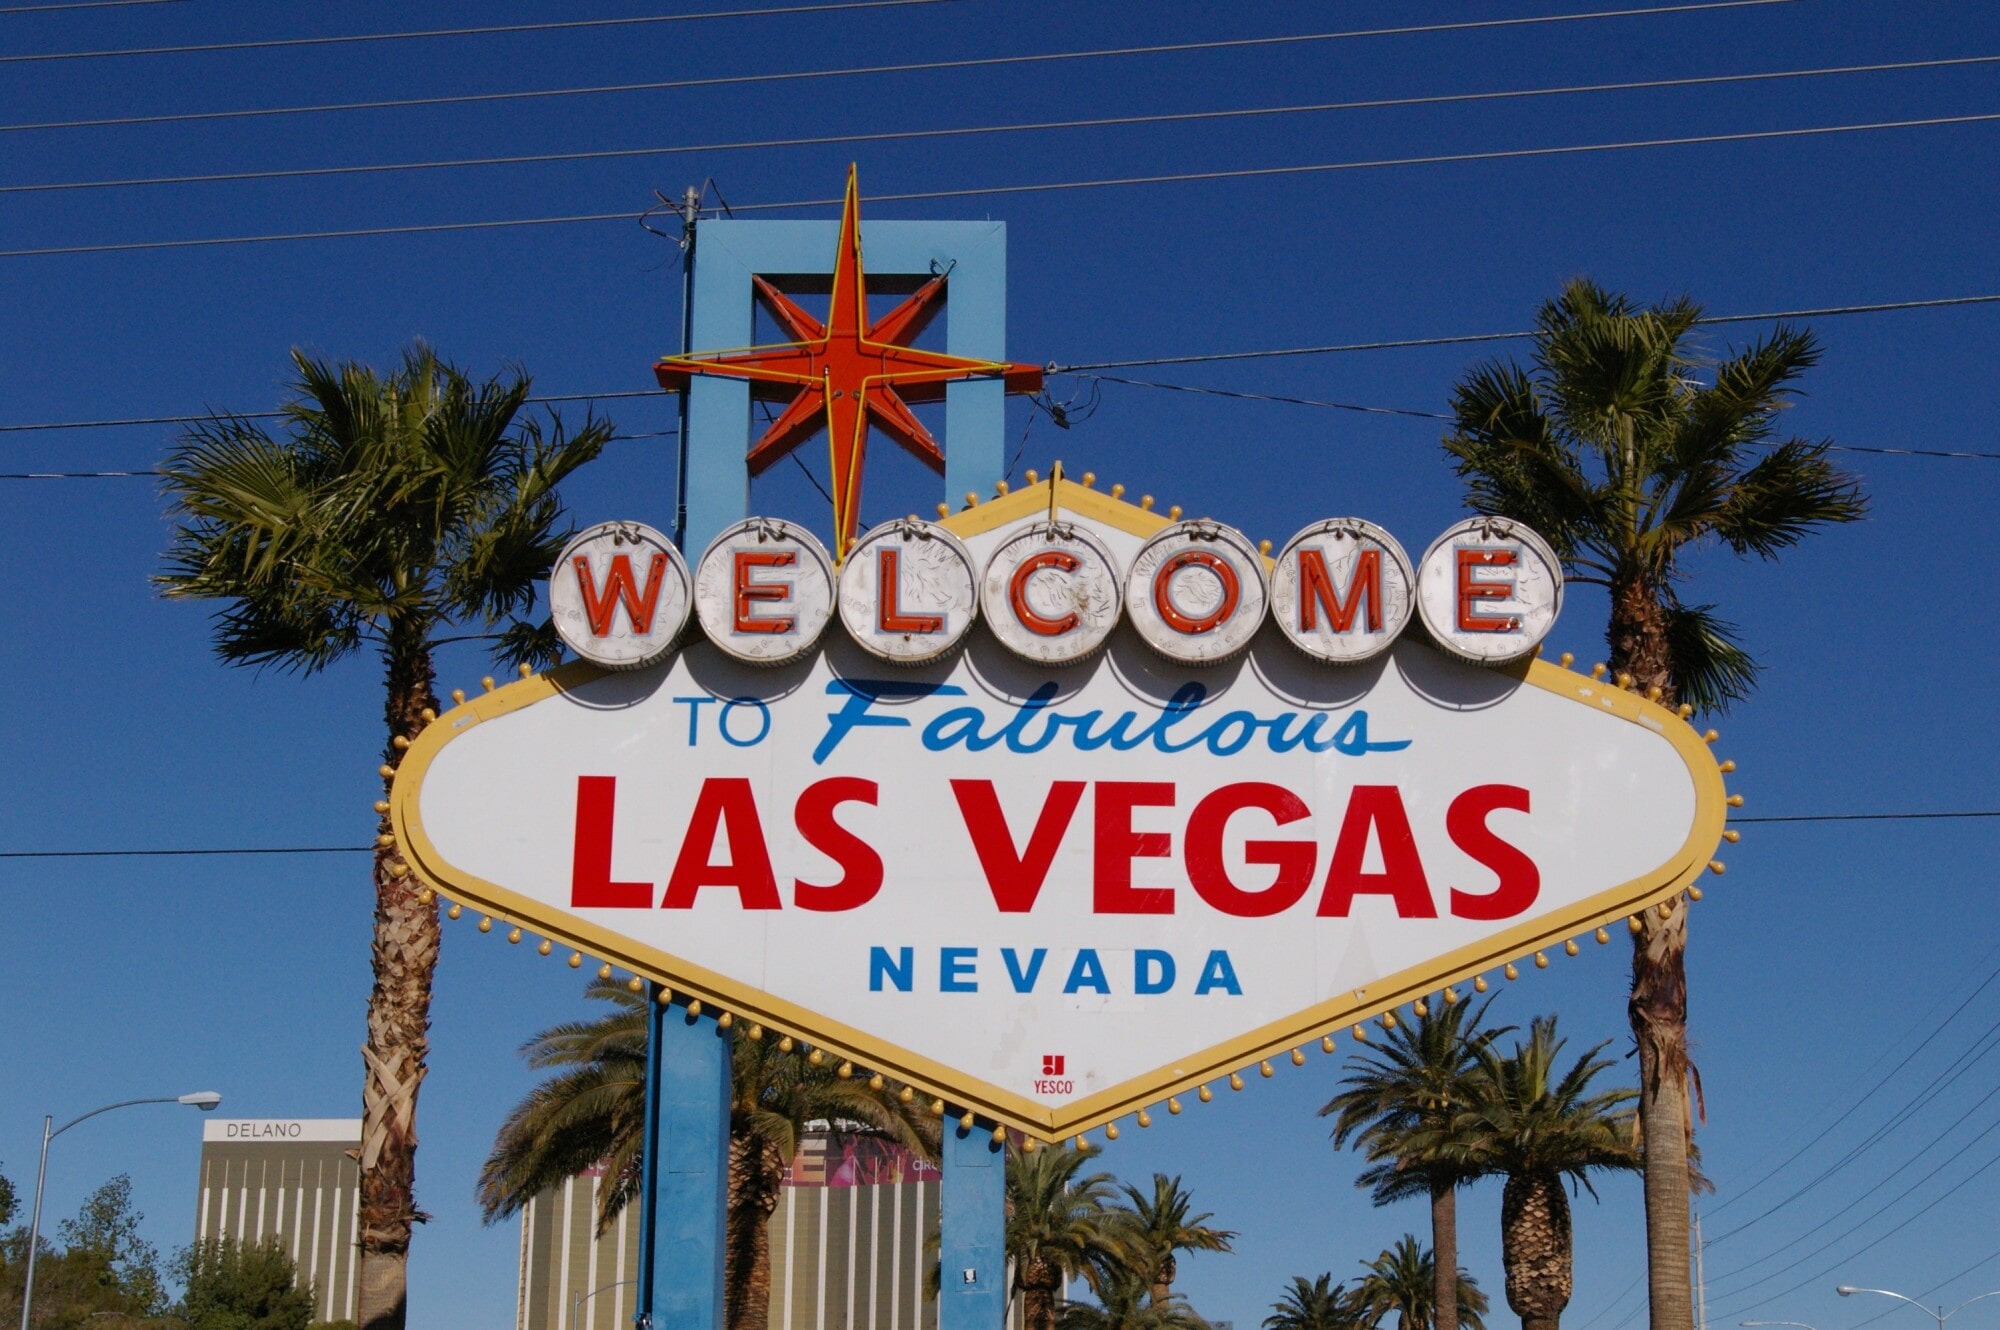 Las Vegas Property Management: 3 Tips for Managing Properties in 2022